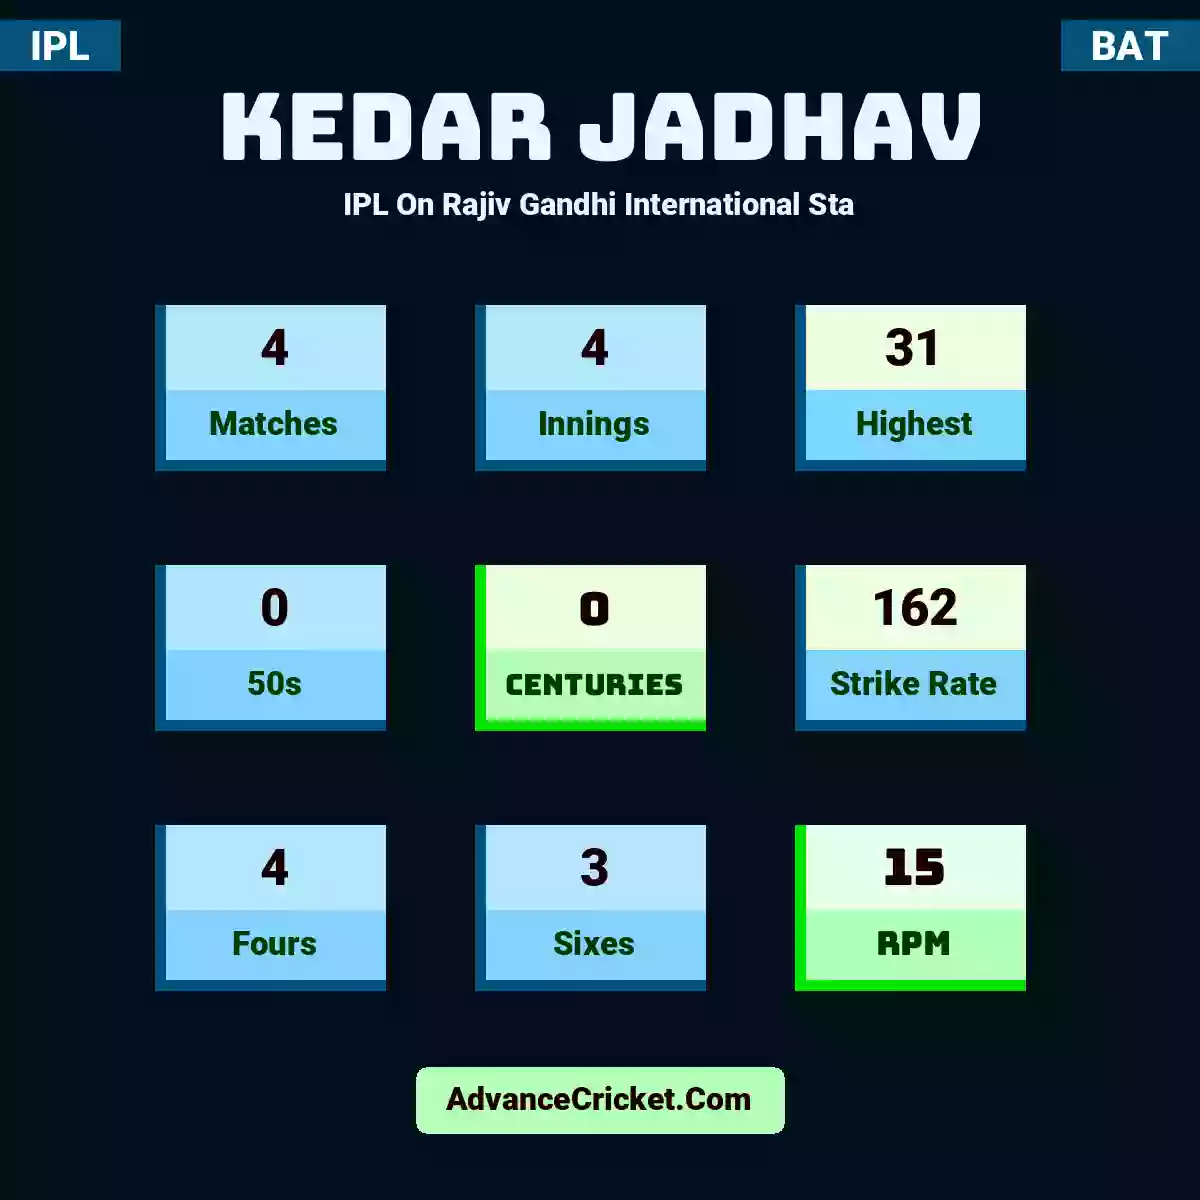 Kedar Jadhav IPL  On Rajiv Gandhi International Sta, Kedar Jadhav played 4 matches, scored 31 runs as highest, 0 half-centuries, and 0 centuries, with a strike rate of 162. K.Jadhav hit 4 fours and 3 sixes, with an RPM of 15.